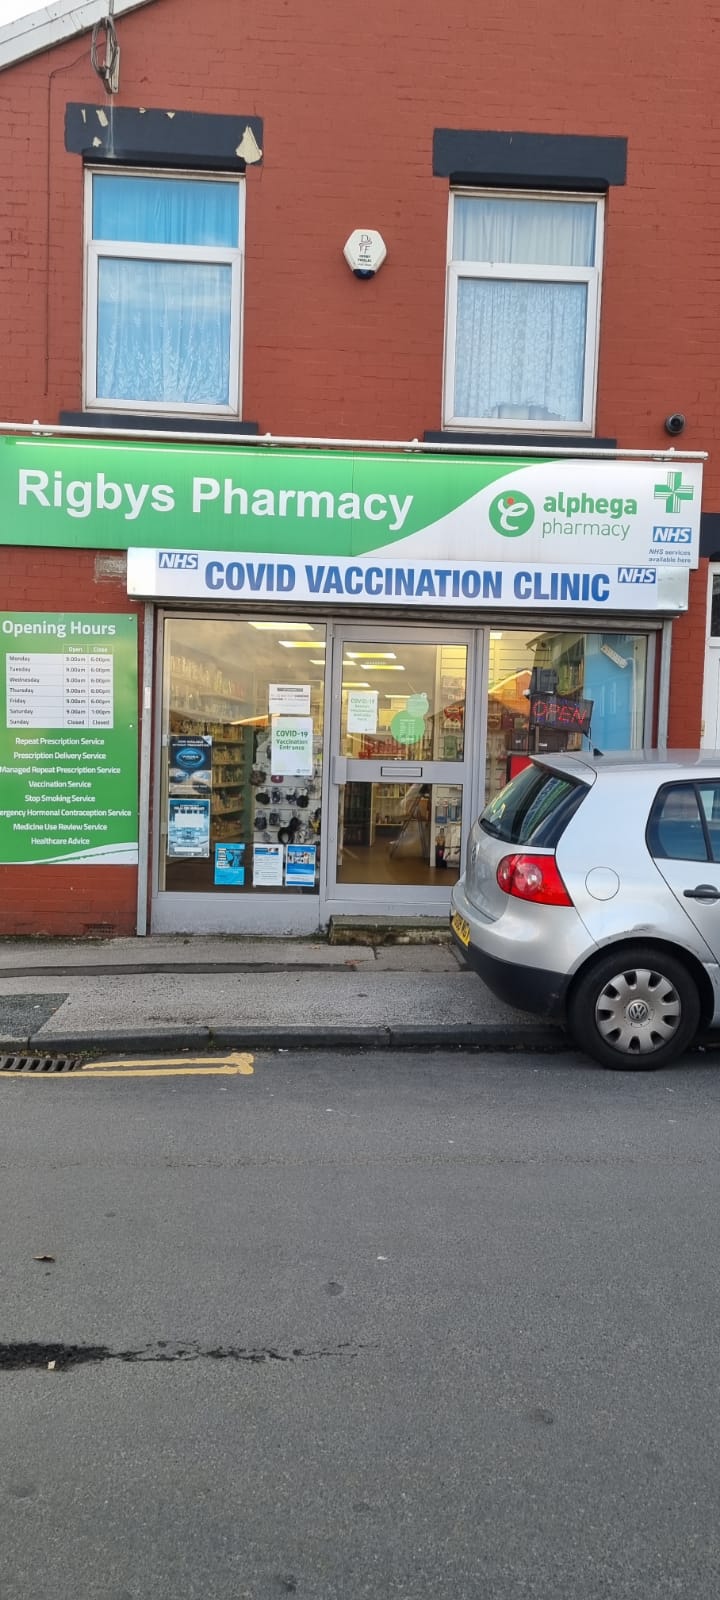 Rigby’s Pharmacy